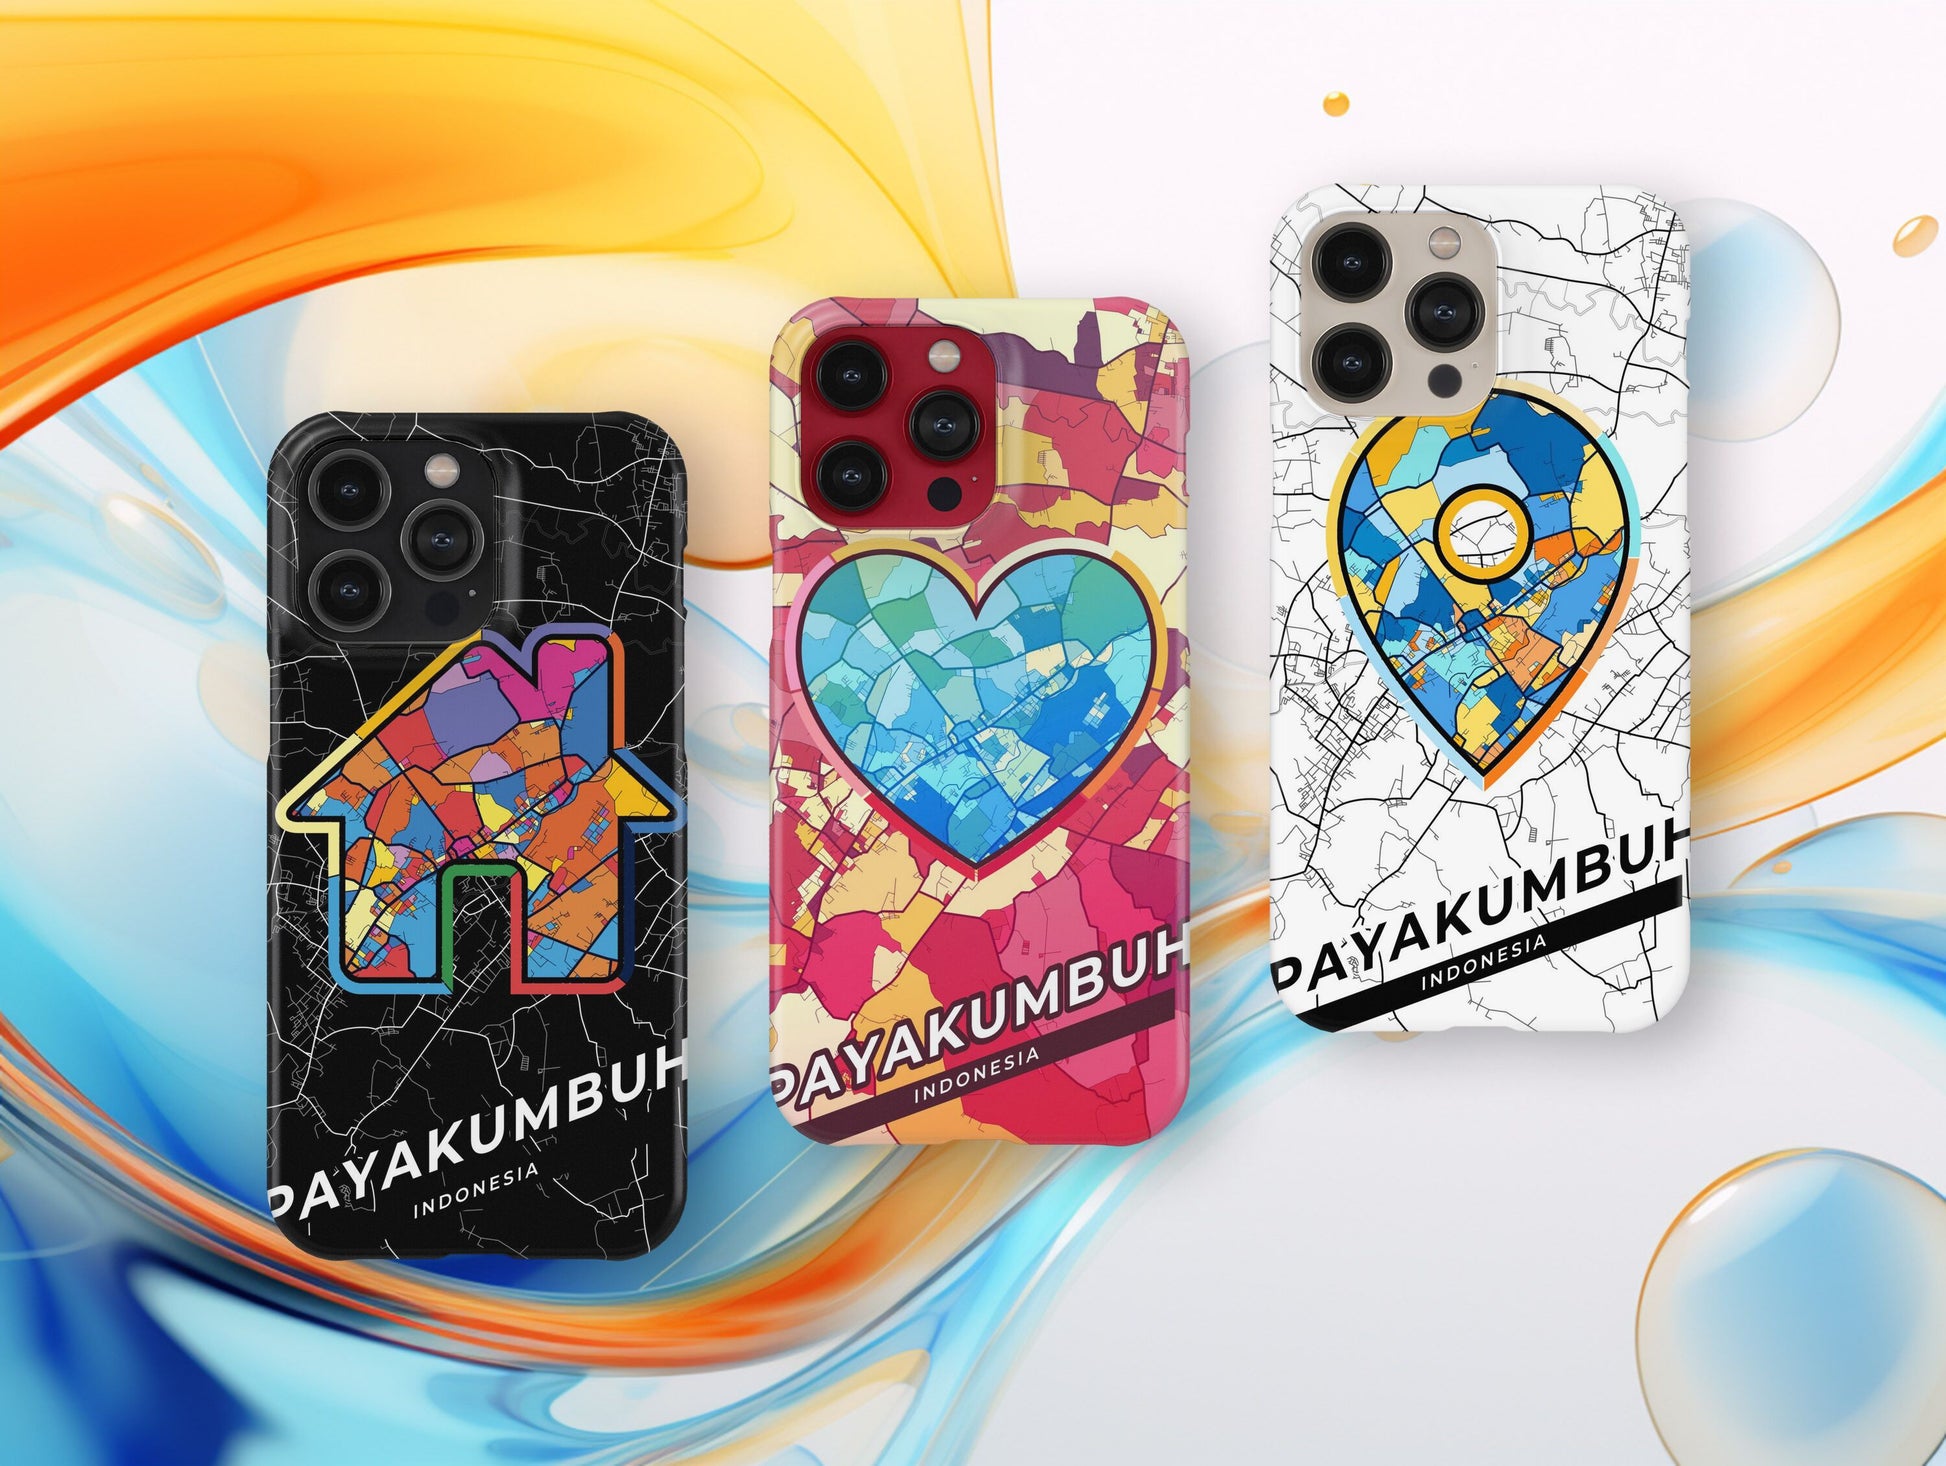 Payakumbuh Indonesia slim phone case with colorful icon